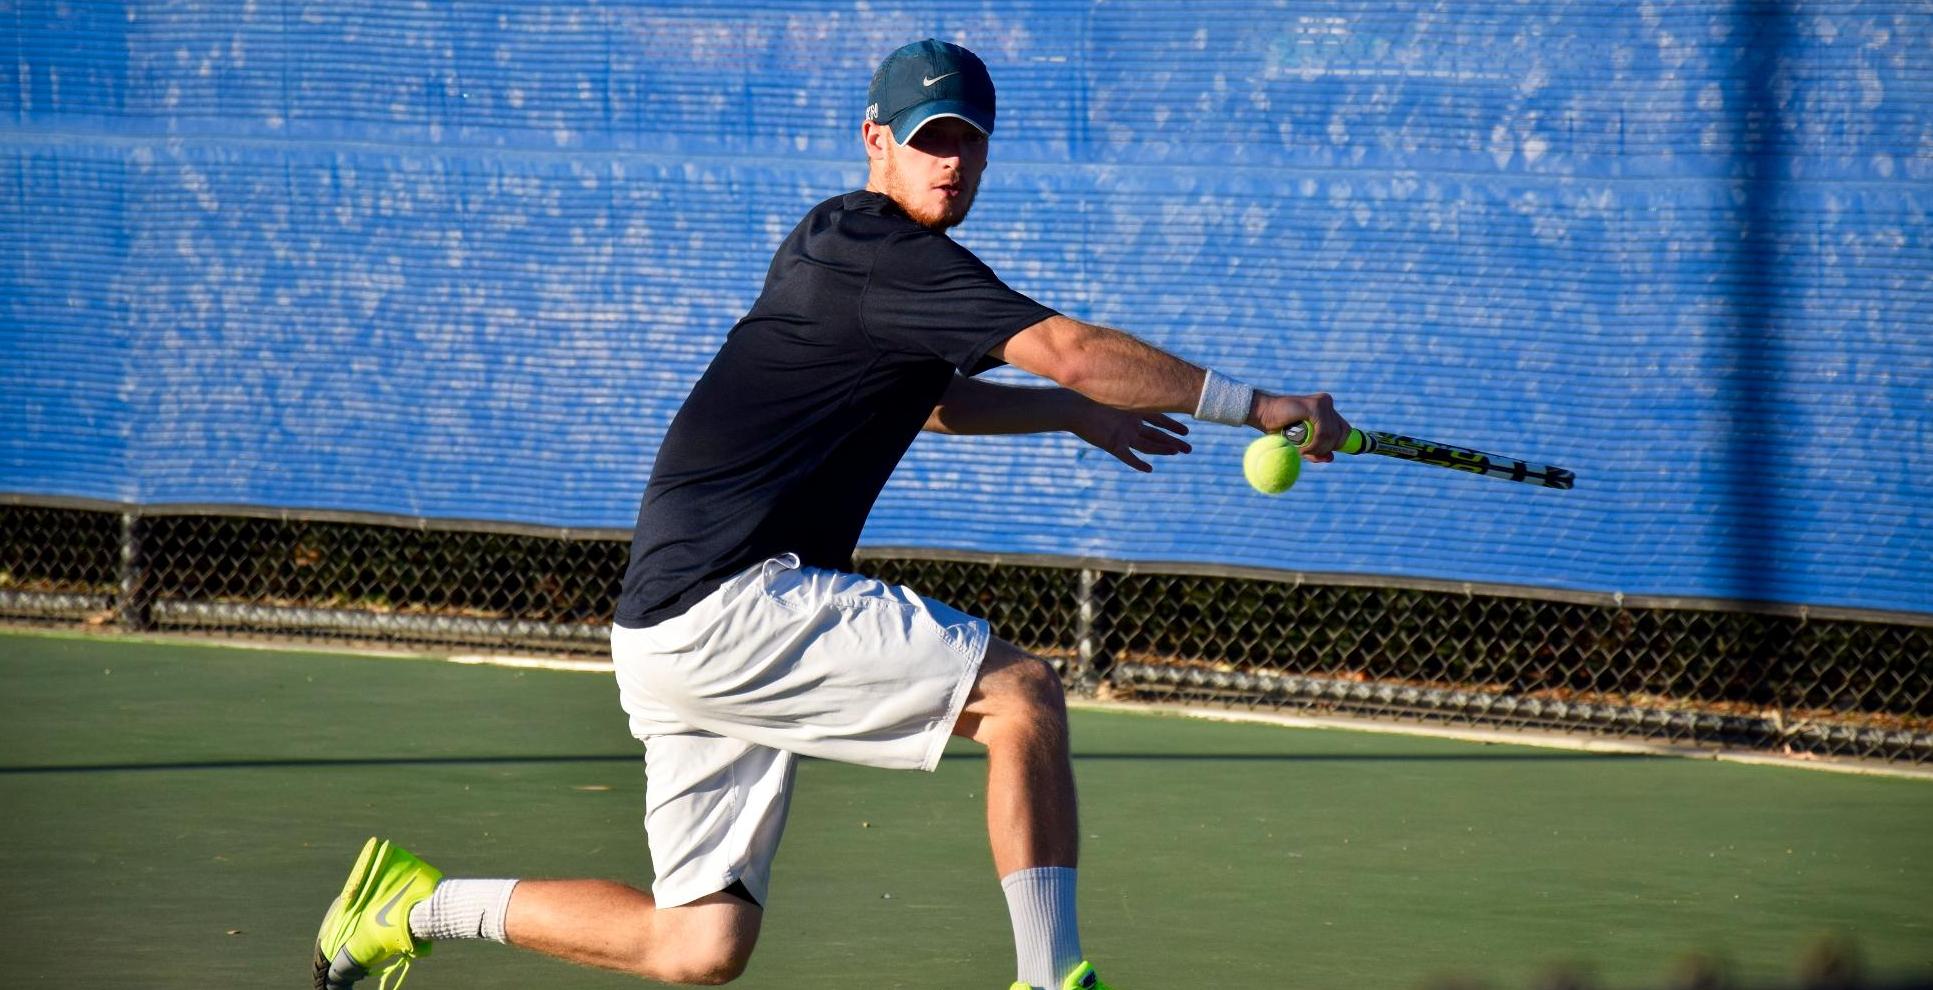 Men's tennis team sweeps Cypress in OEC opening match